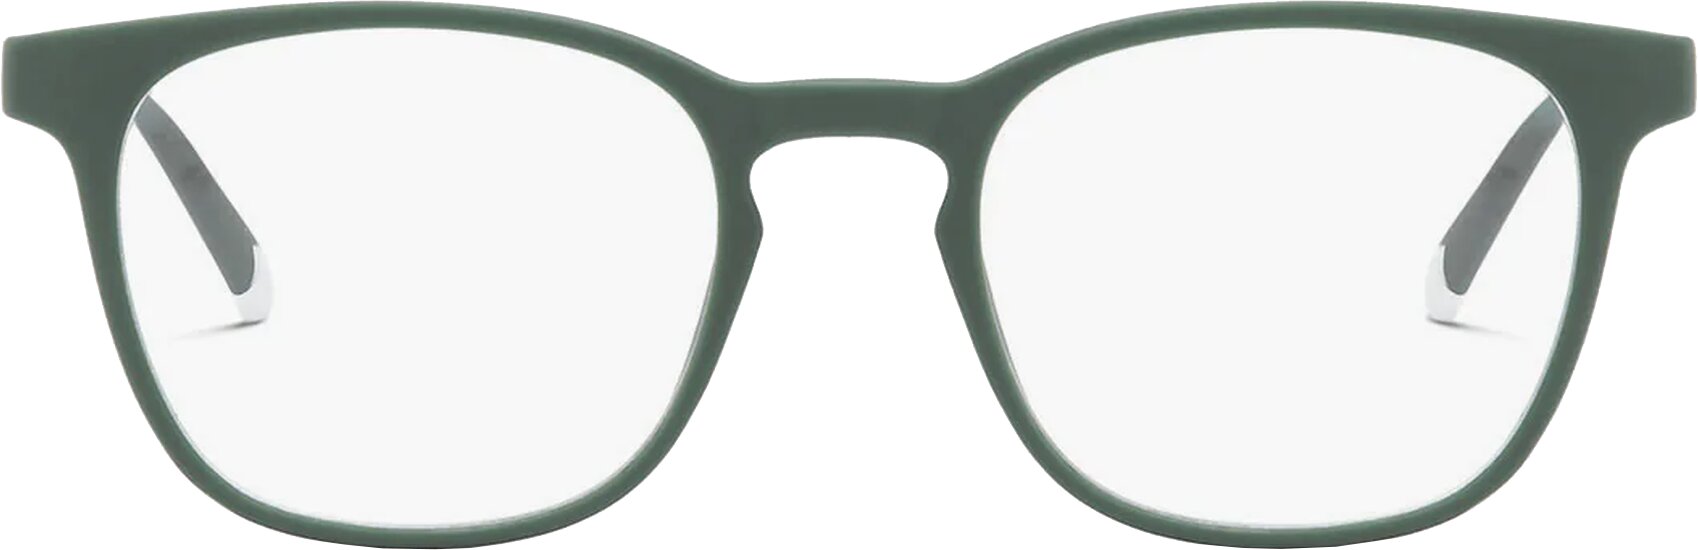 Brýle Barner Dalston, proti modrému světlu, dark green - DDG